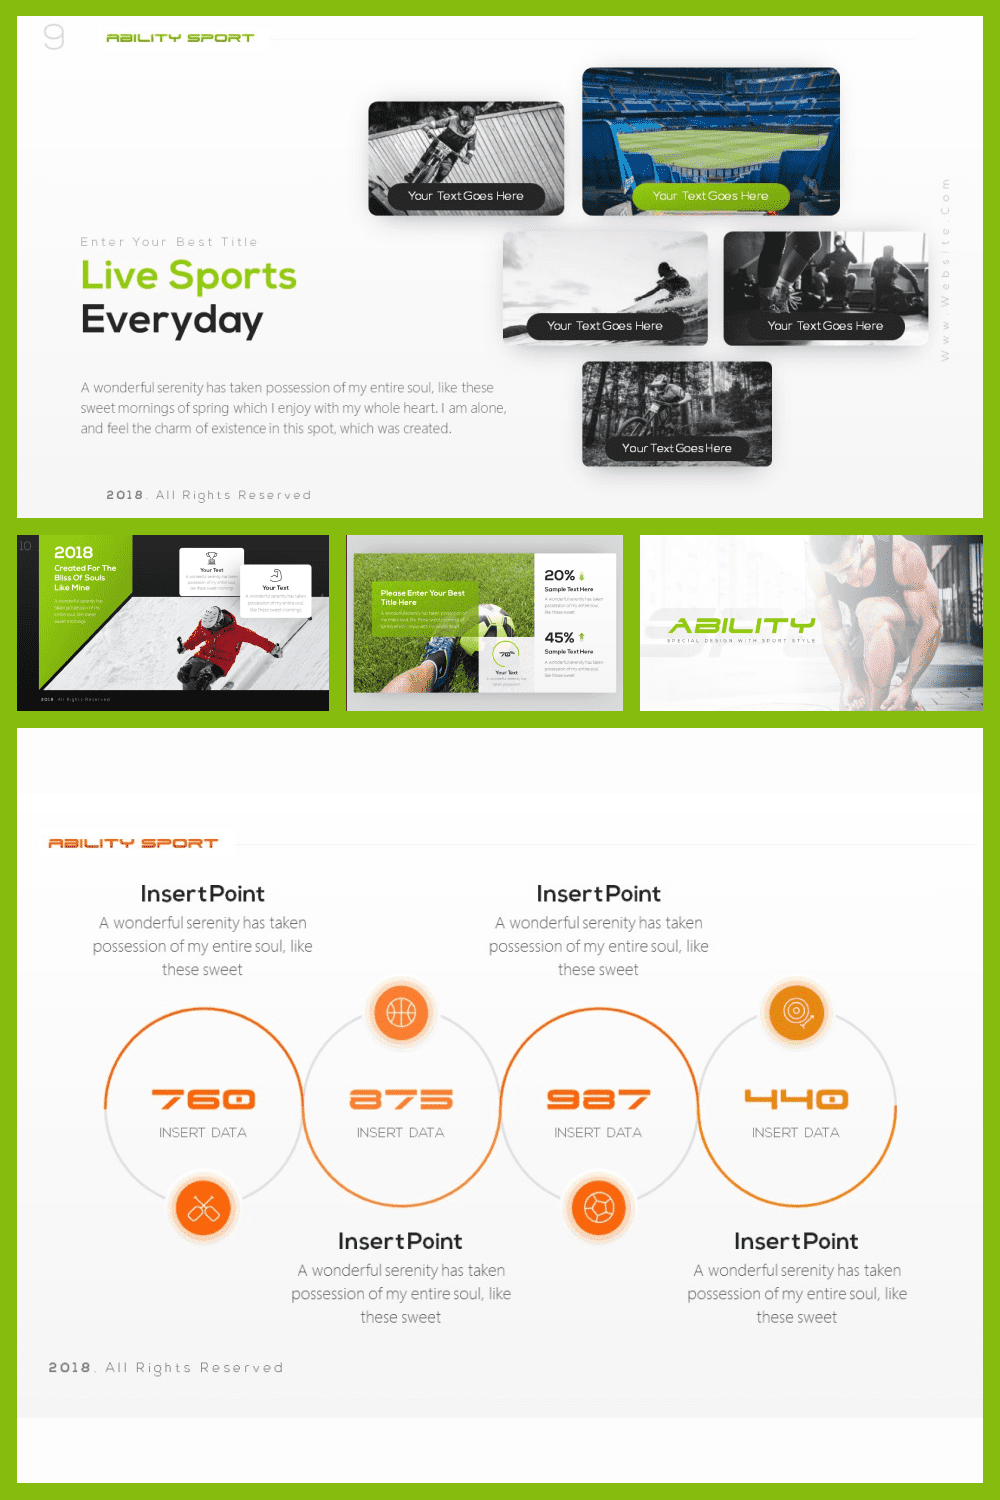 Ability sports presentation template.